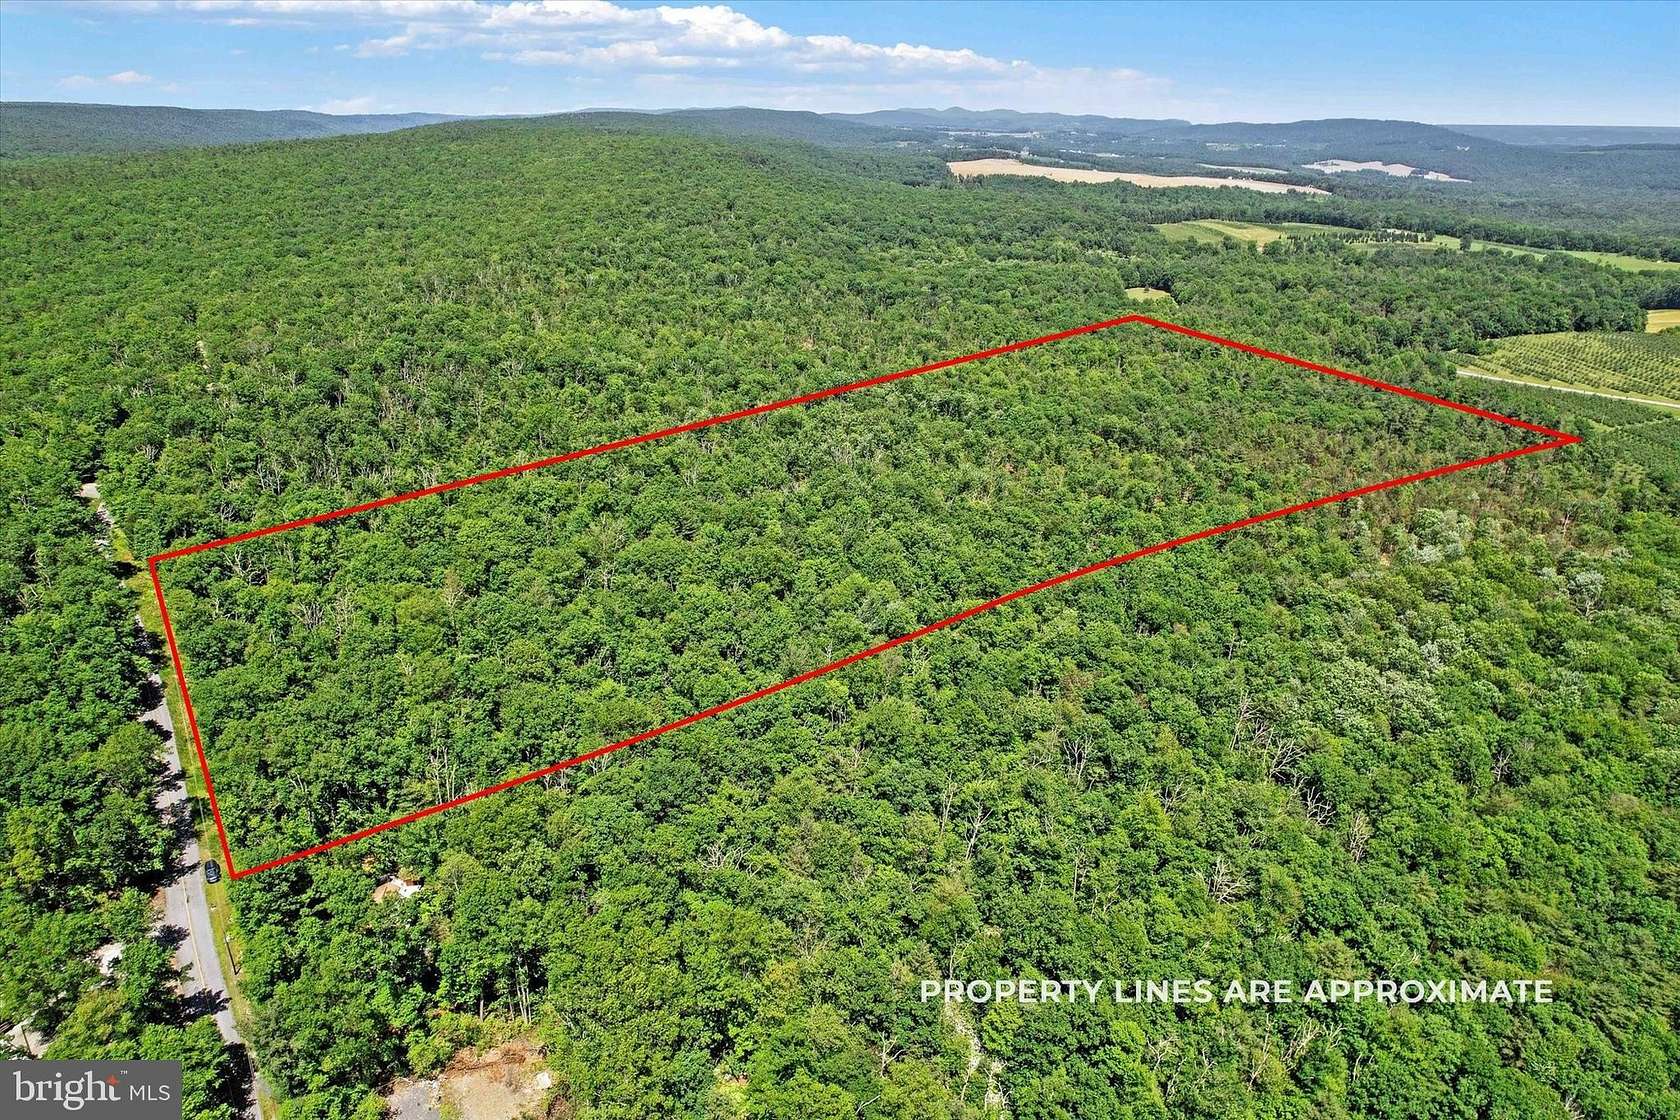 27.44 Acres of Recreational Land for Sale in Orrtanna, Pennsylvania